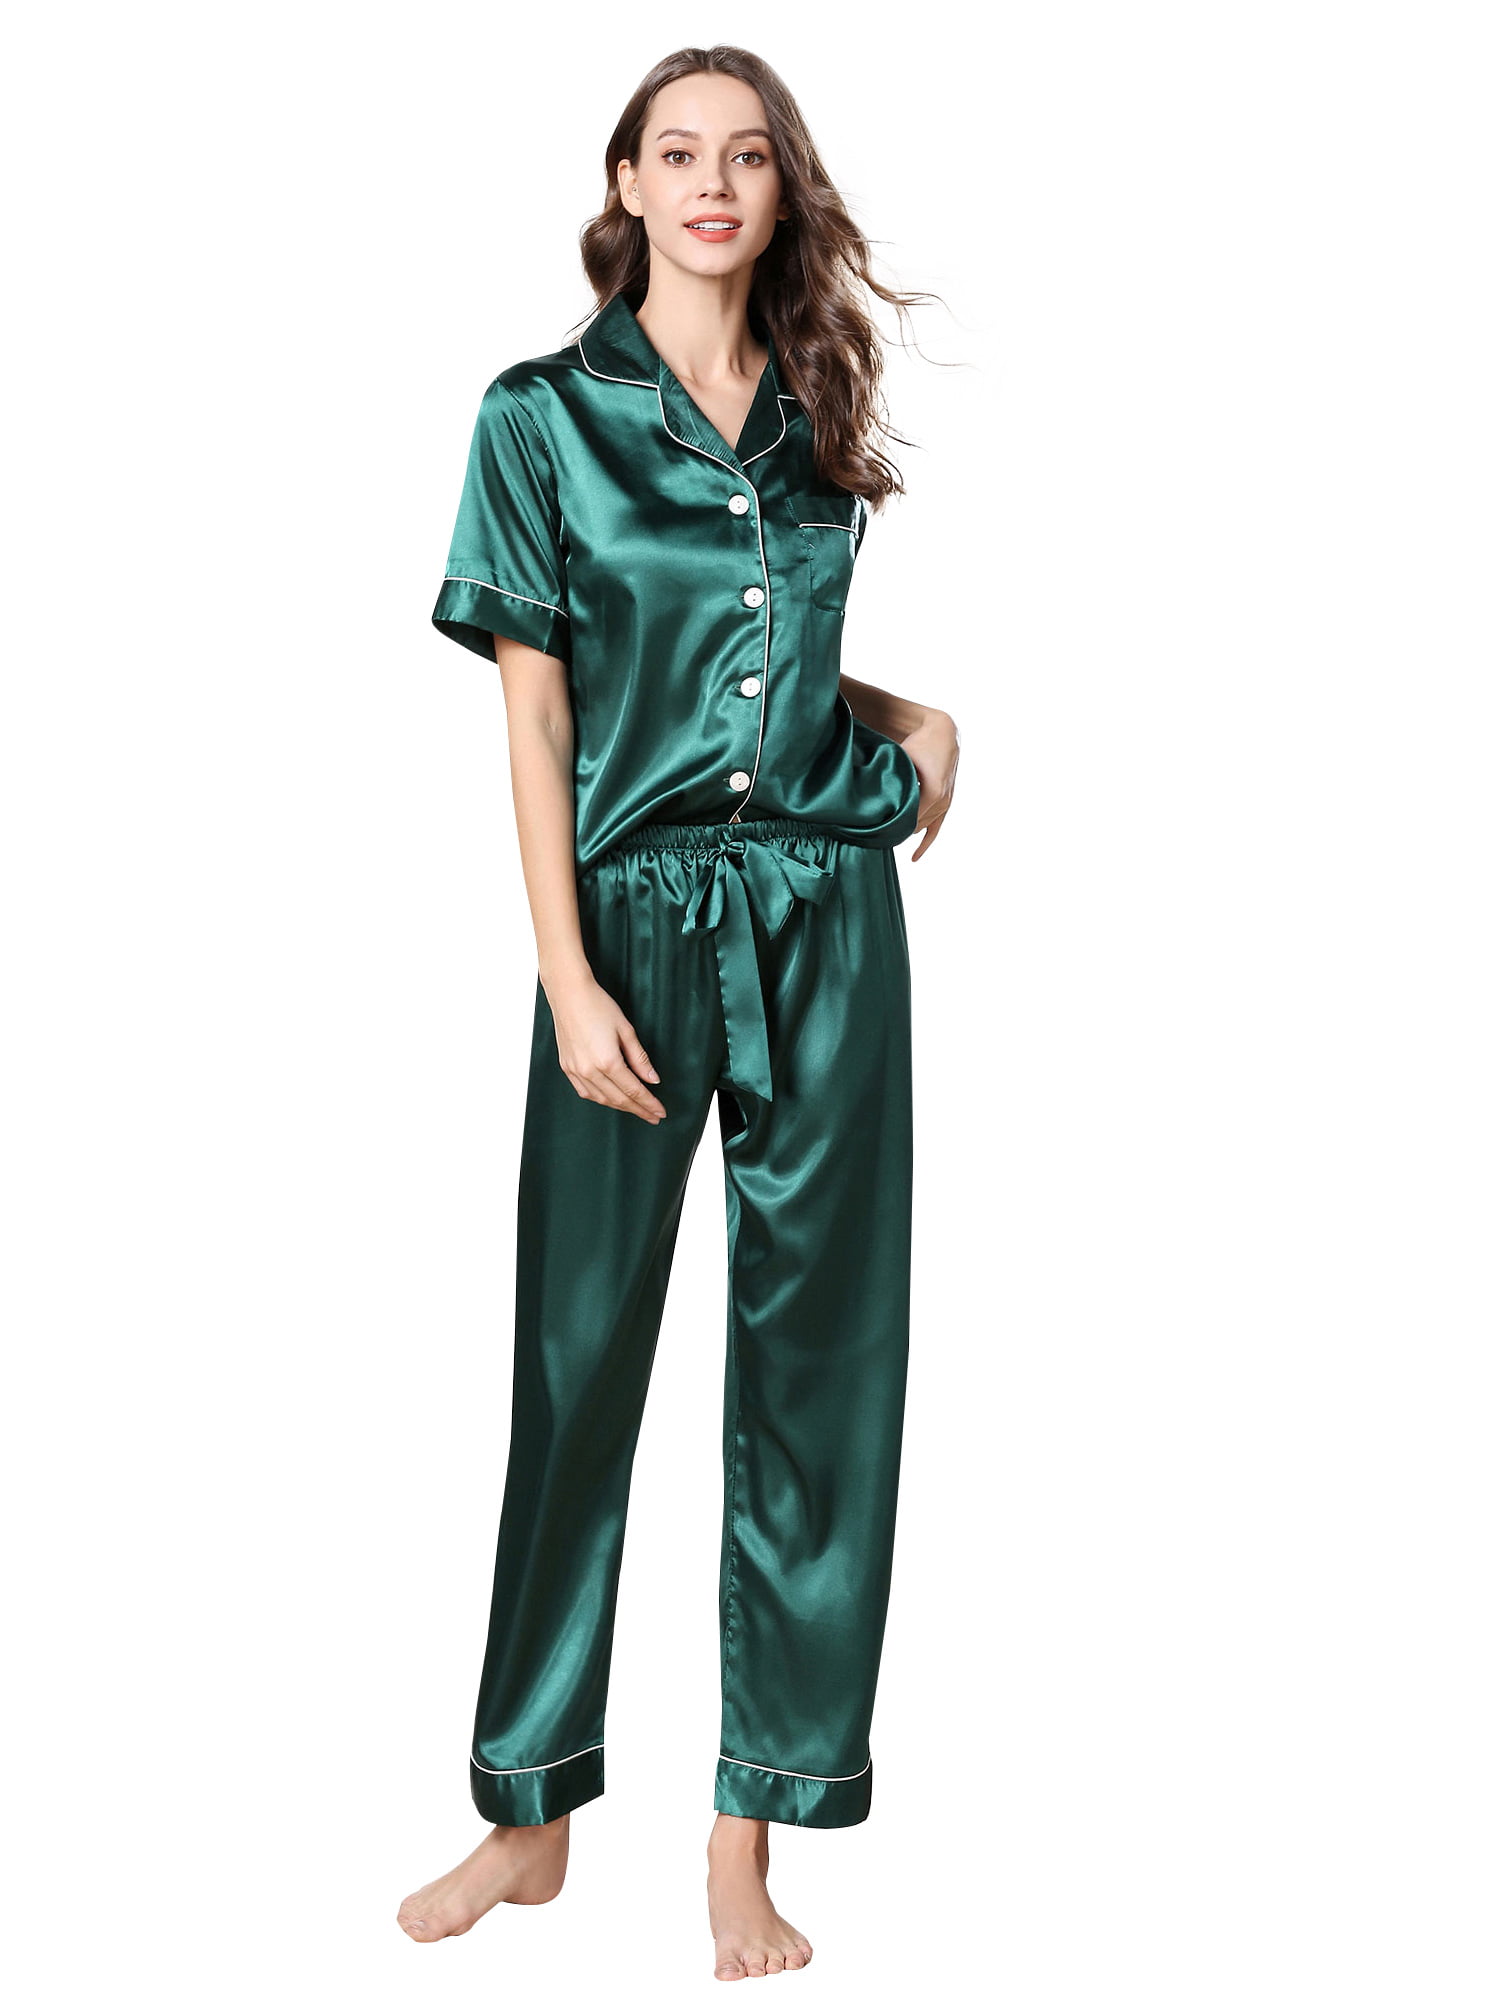 Selfieee - Selfieee Women's Pajamas Set Short Sleeve Sleepwear Button ...